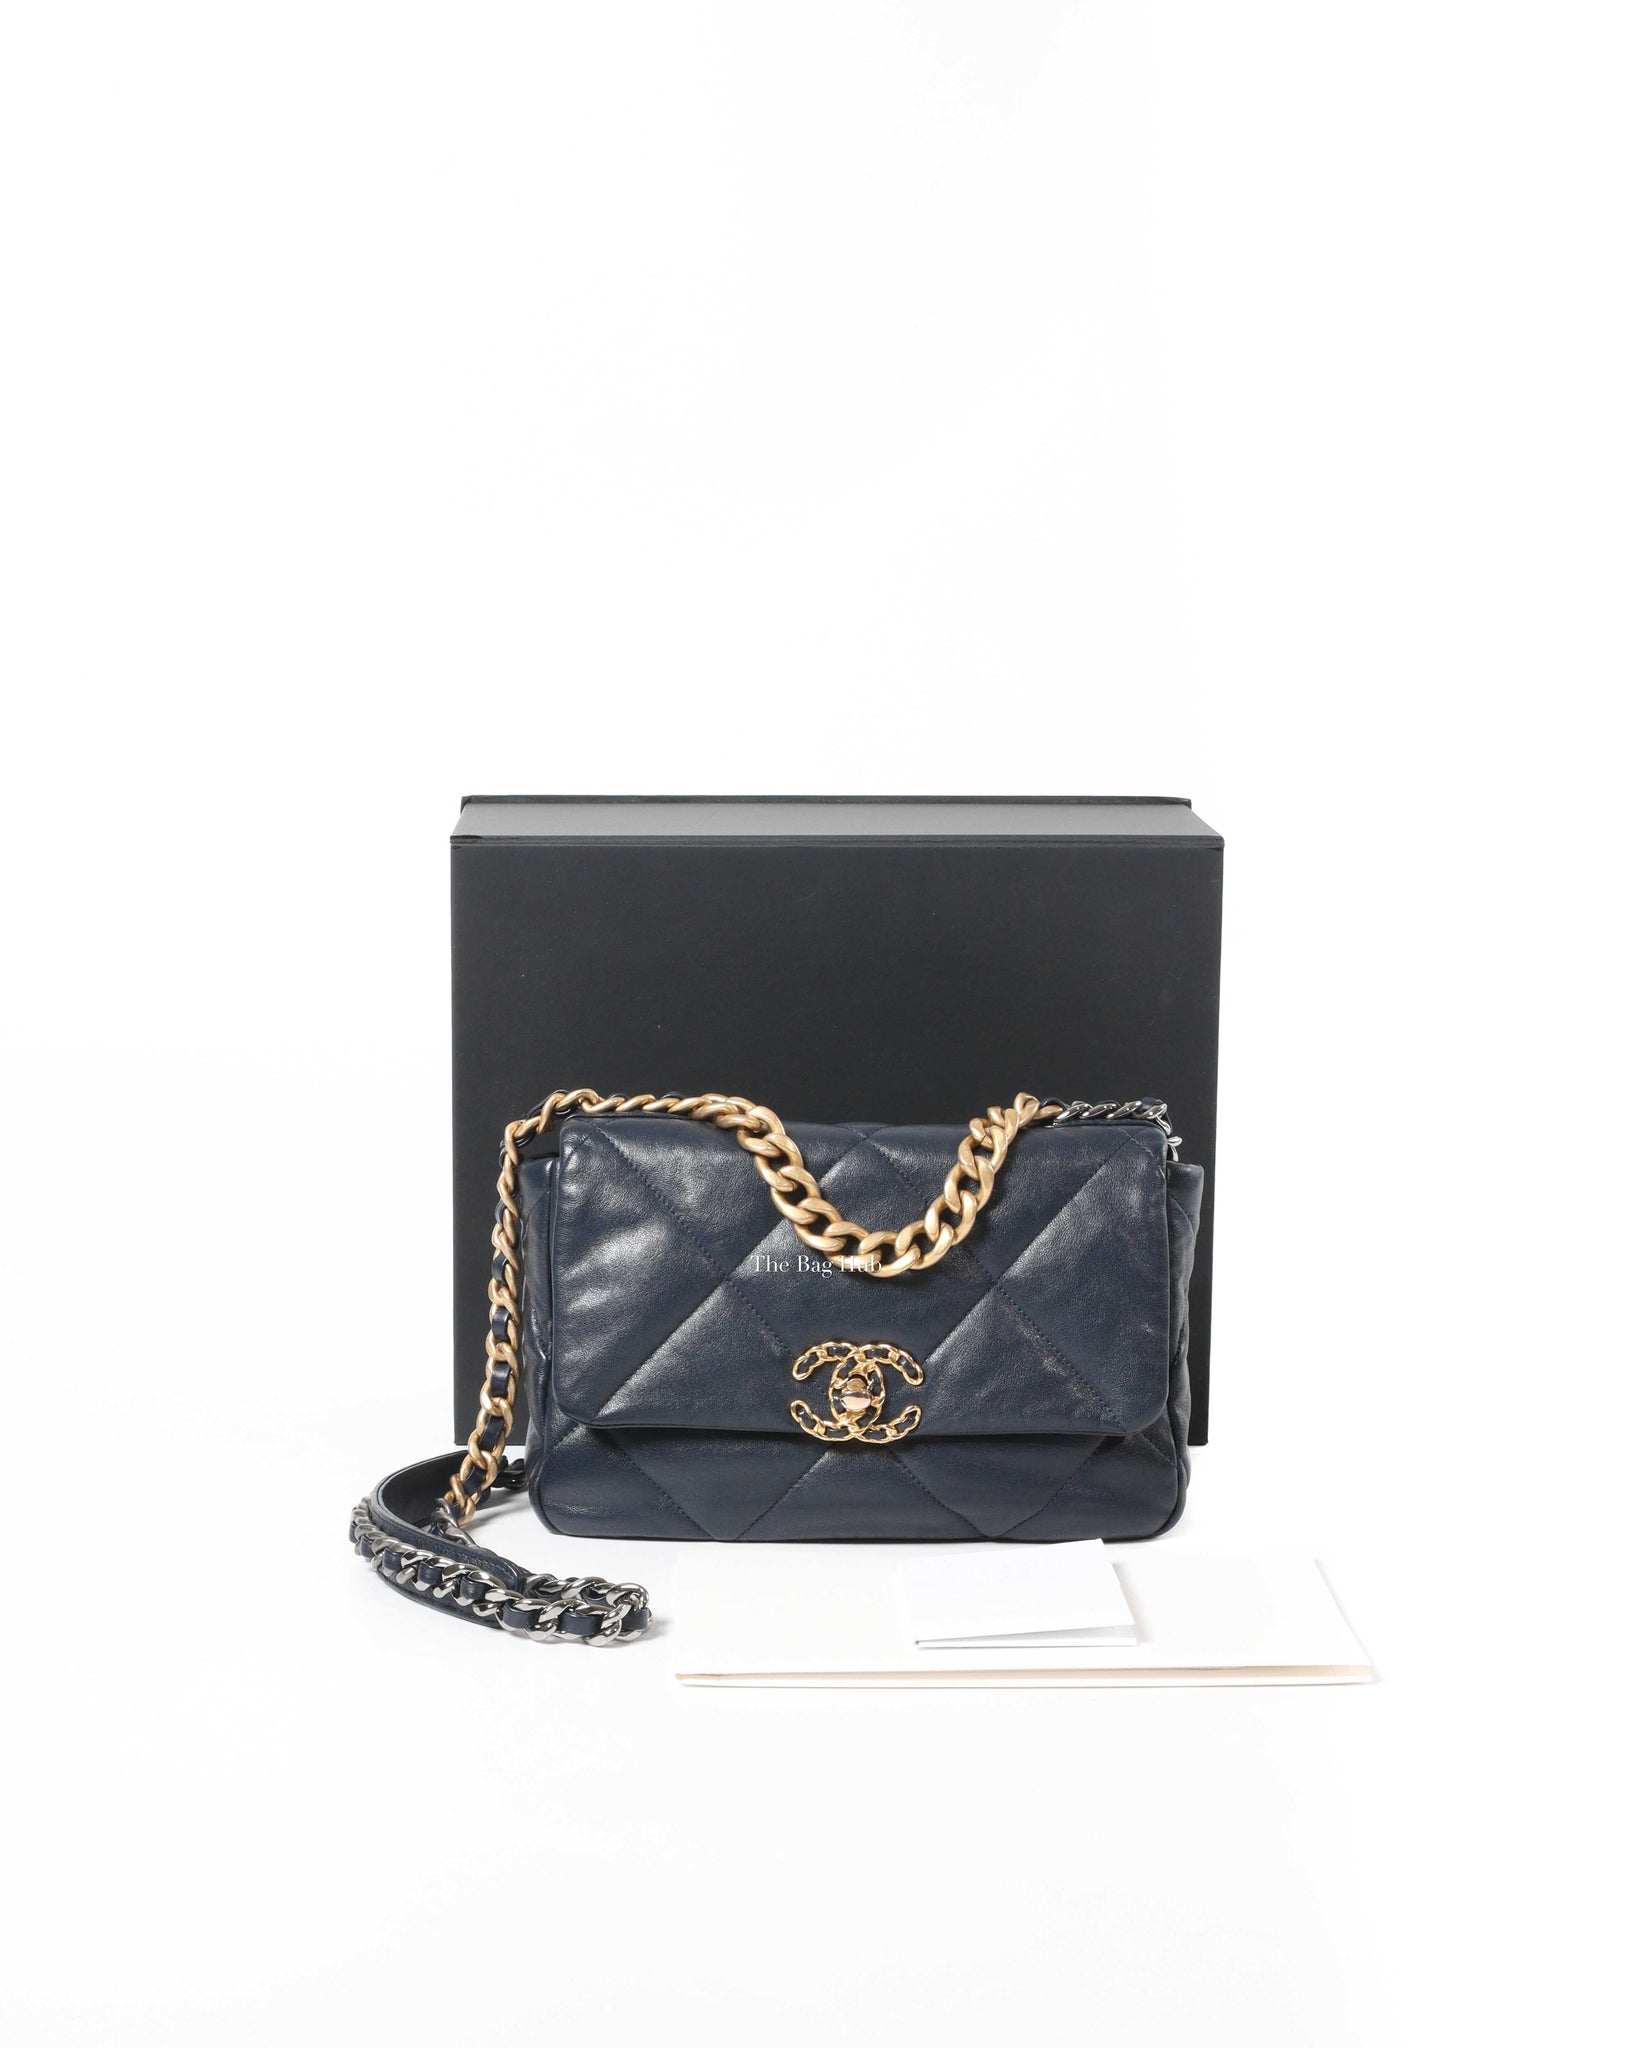 Chanel Navy Blue Lambskin C19 Flap Bag, Designer Brand, Authentic Chanel